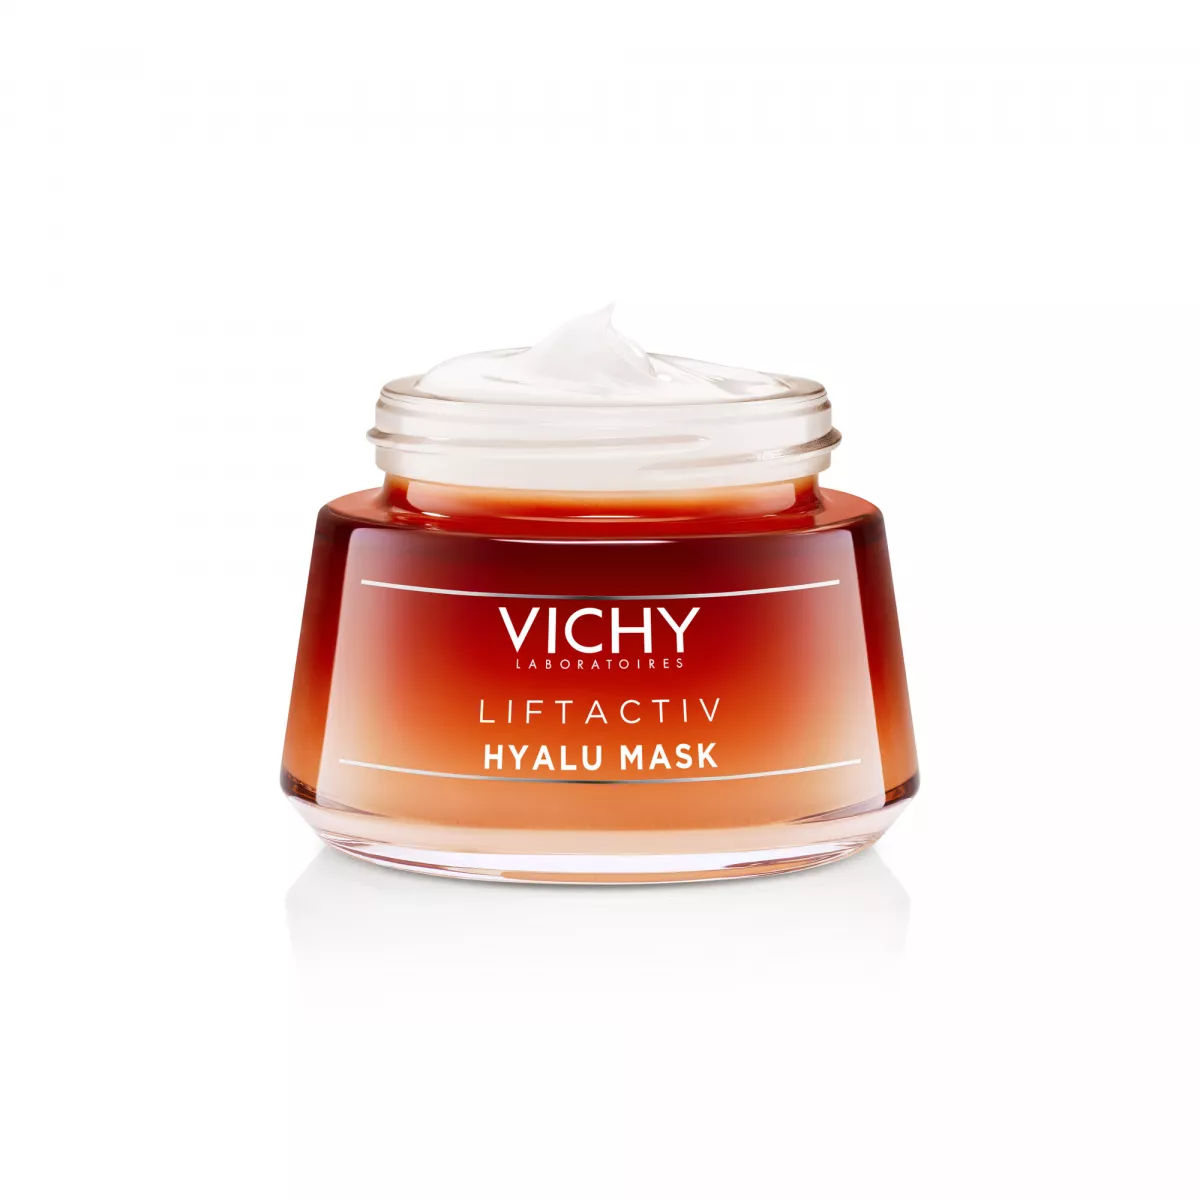 VICHY Liftactiv Hyalu-Mask, Masca Acid Hialuronic 1%, 50 ml, [],remediumfarm.ro